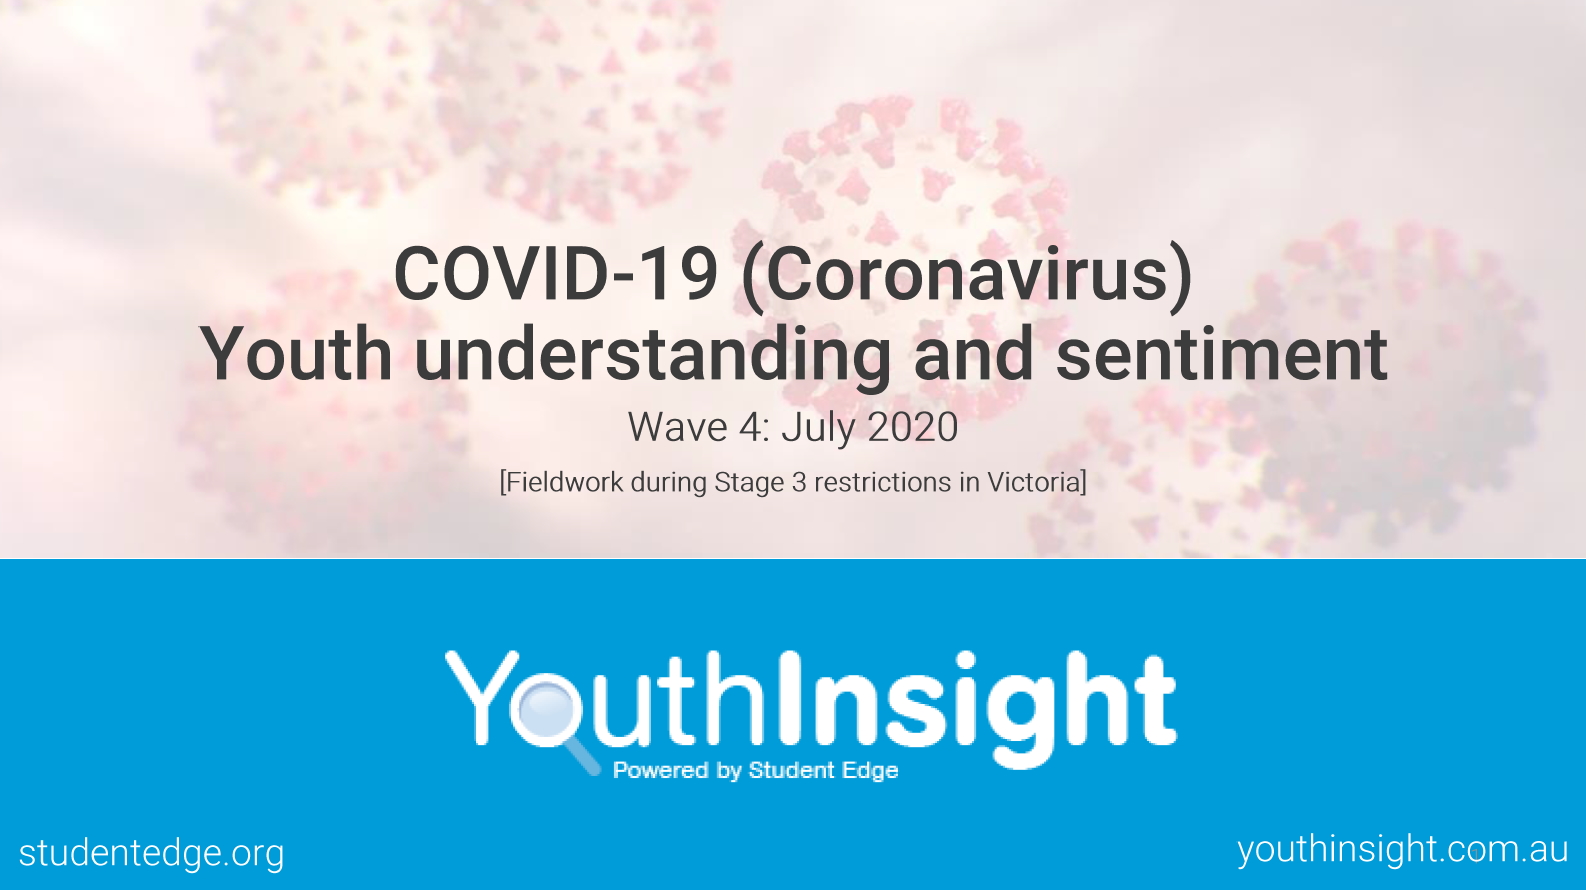 COVID-19 Wave 4 Survey